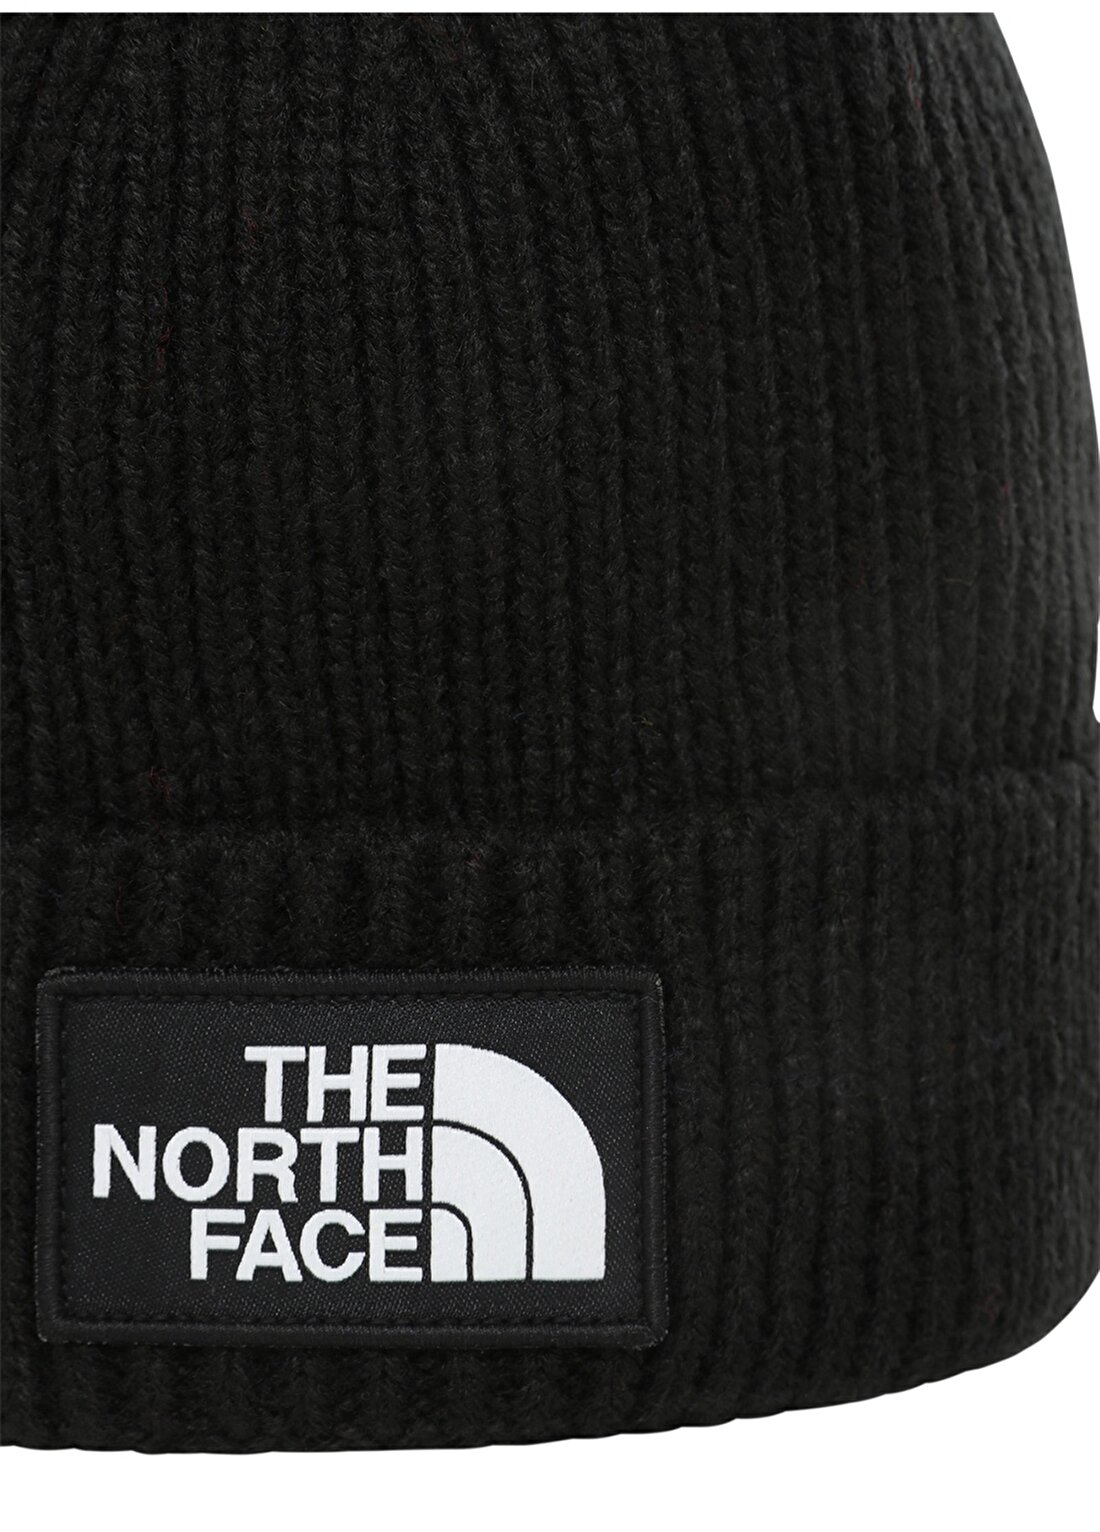 The North Face NF0A3FMVJK31 Y Box Logo Cuff Bean Siyah Erkek Çocuk Bere